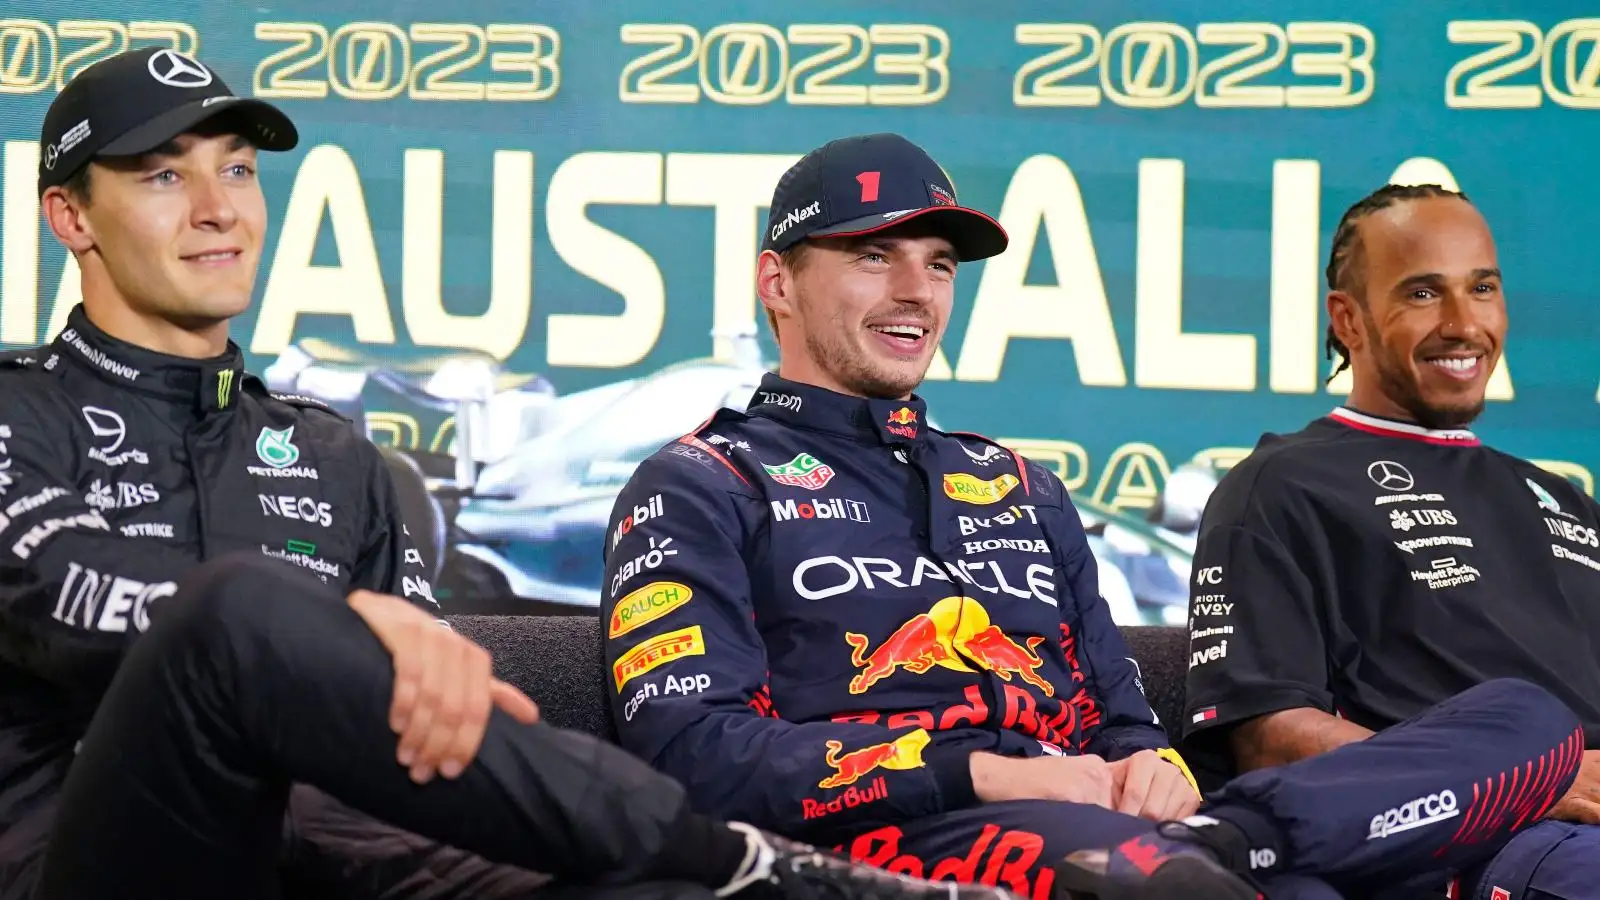 George Russell, Max Verstappen and Lewis Hamilton. Melbourne, Australia. April 2023.